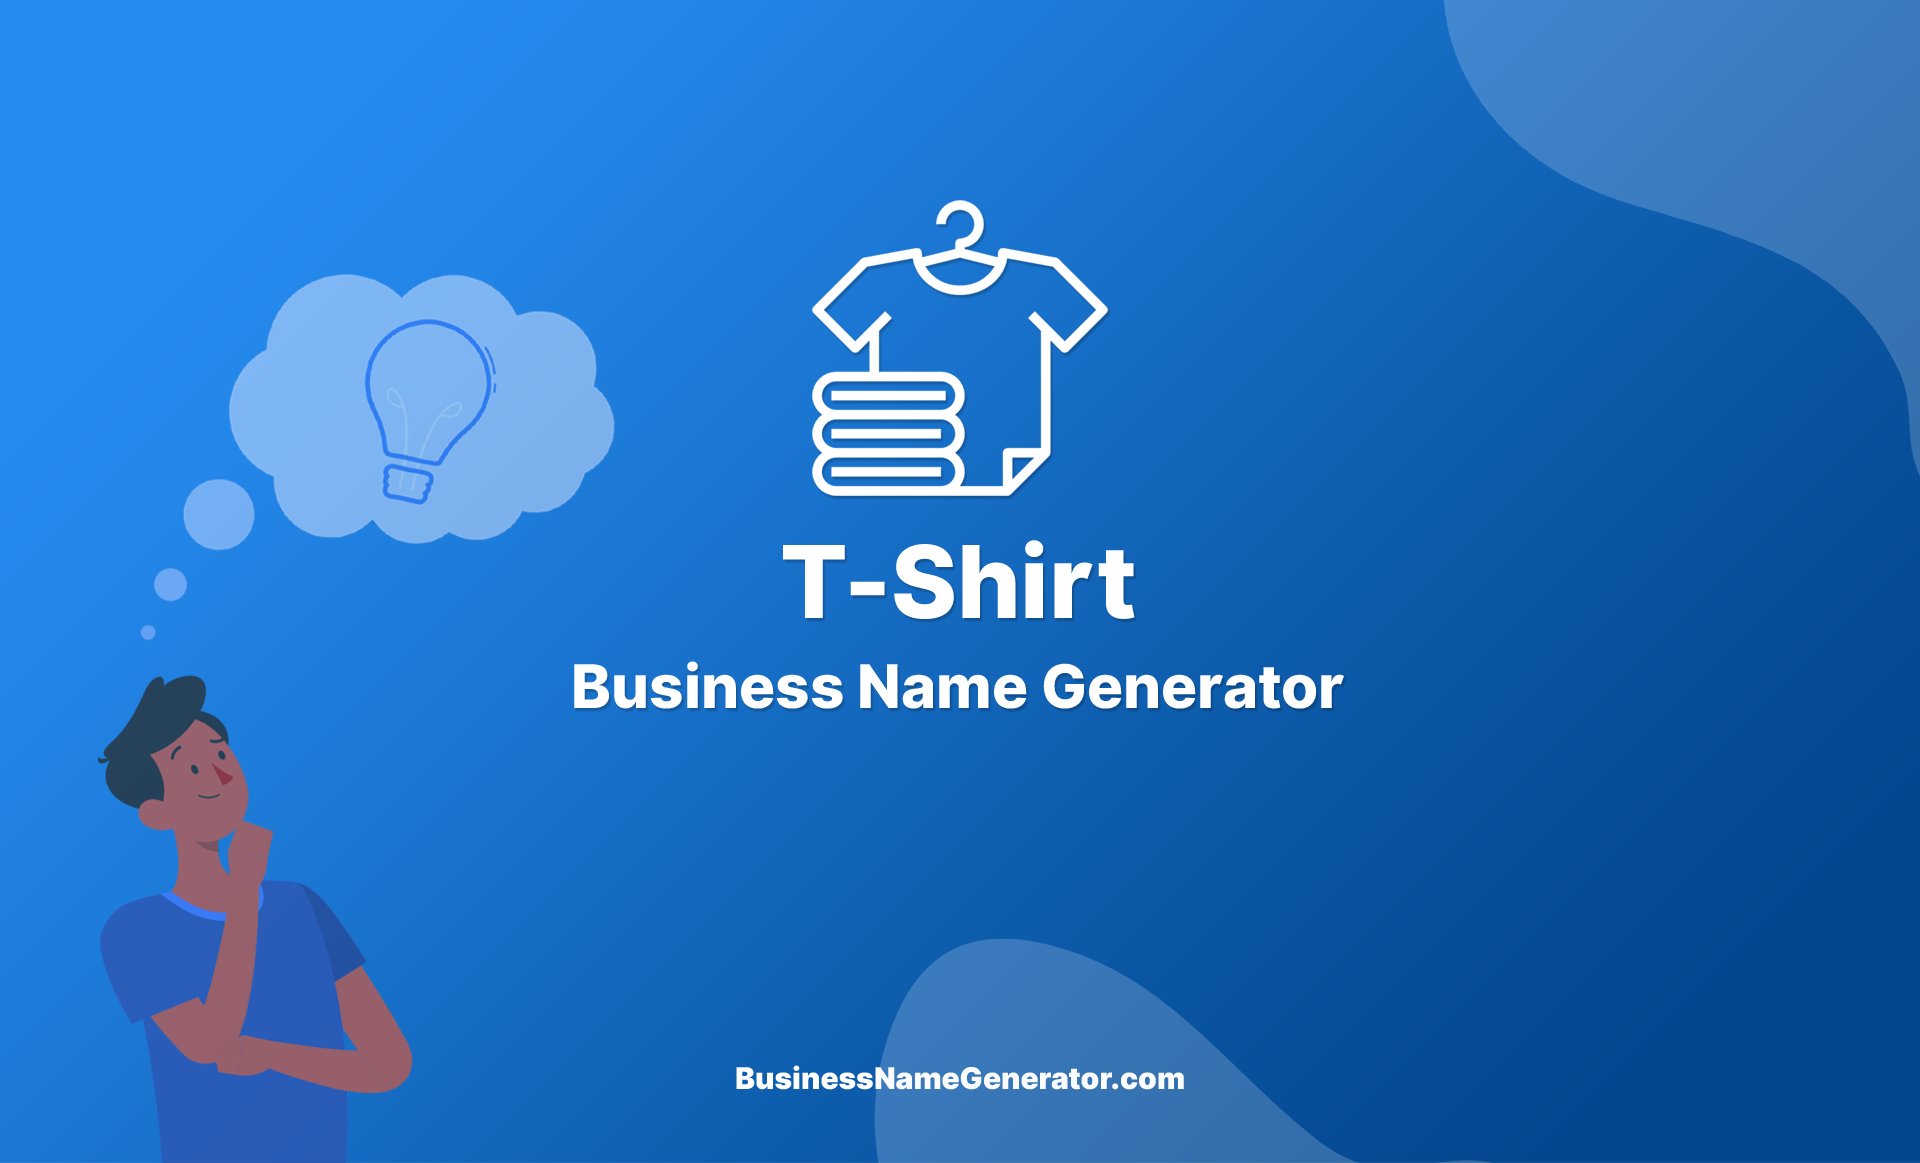 T-Shirt Business Name Generator